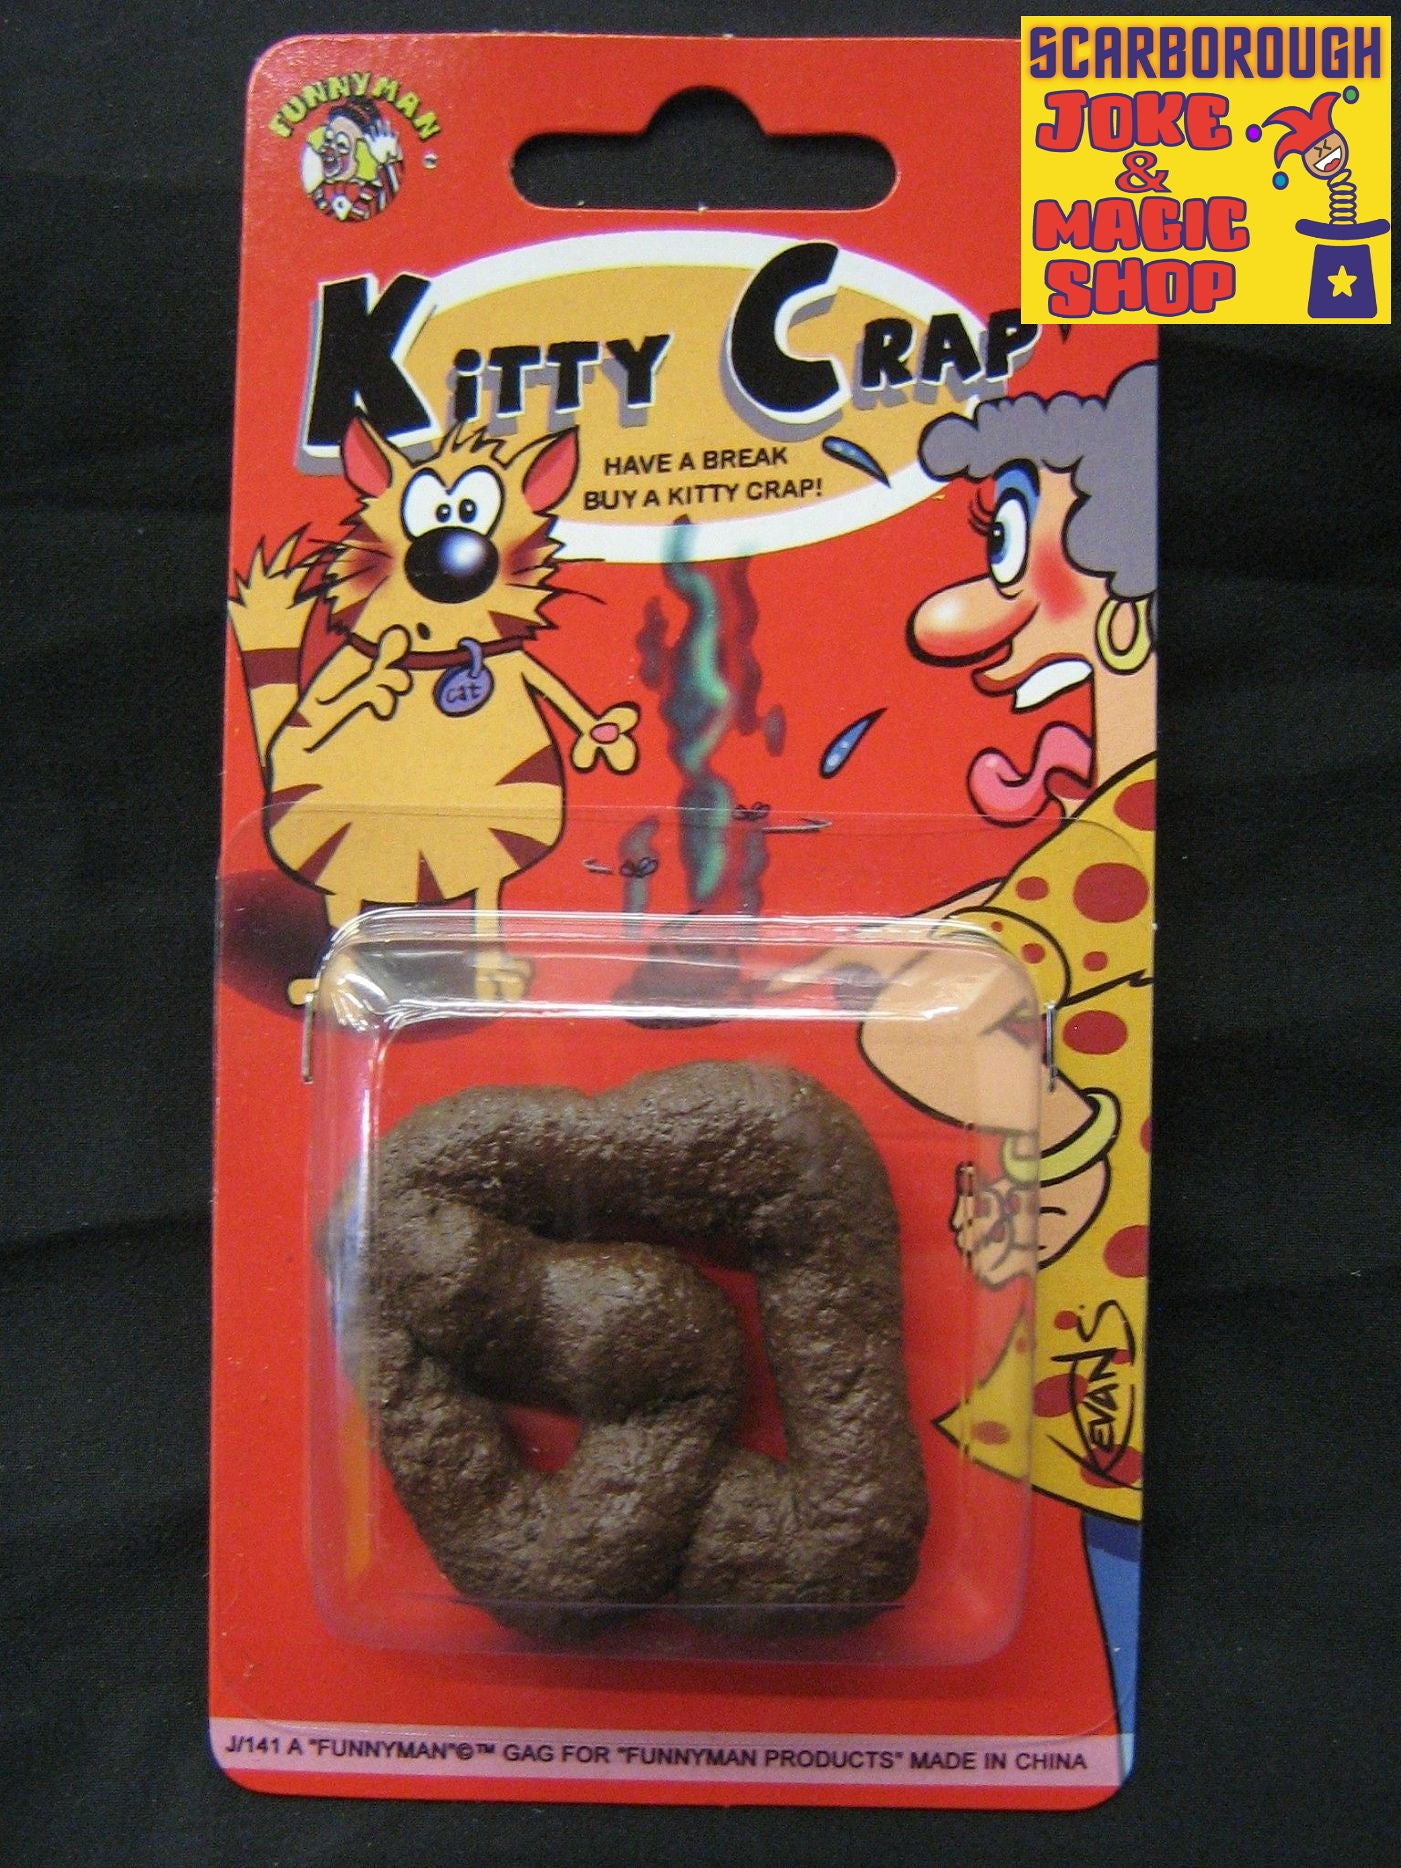 Kitty Cat Poo - Crap